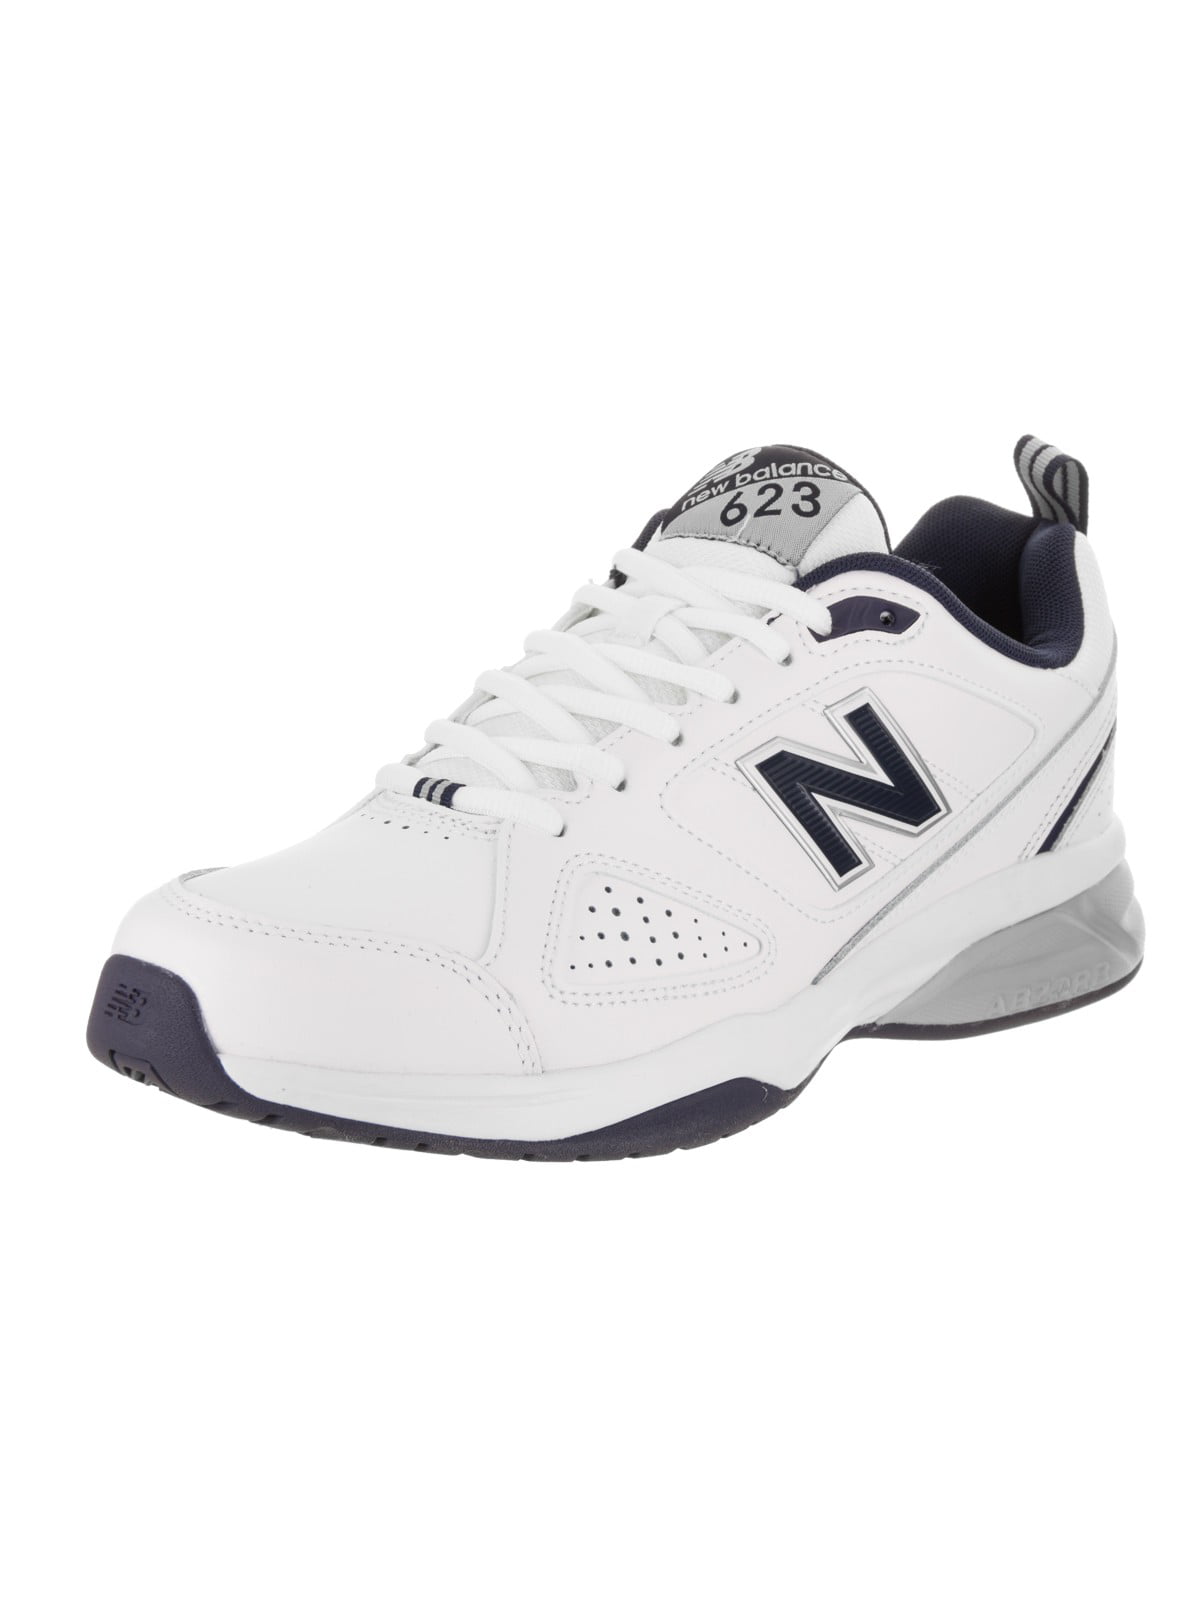 Visita lo Store di New BalanceNew Balance Men's 623v3 Training Shoe 10 2E UK White/Navy 